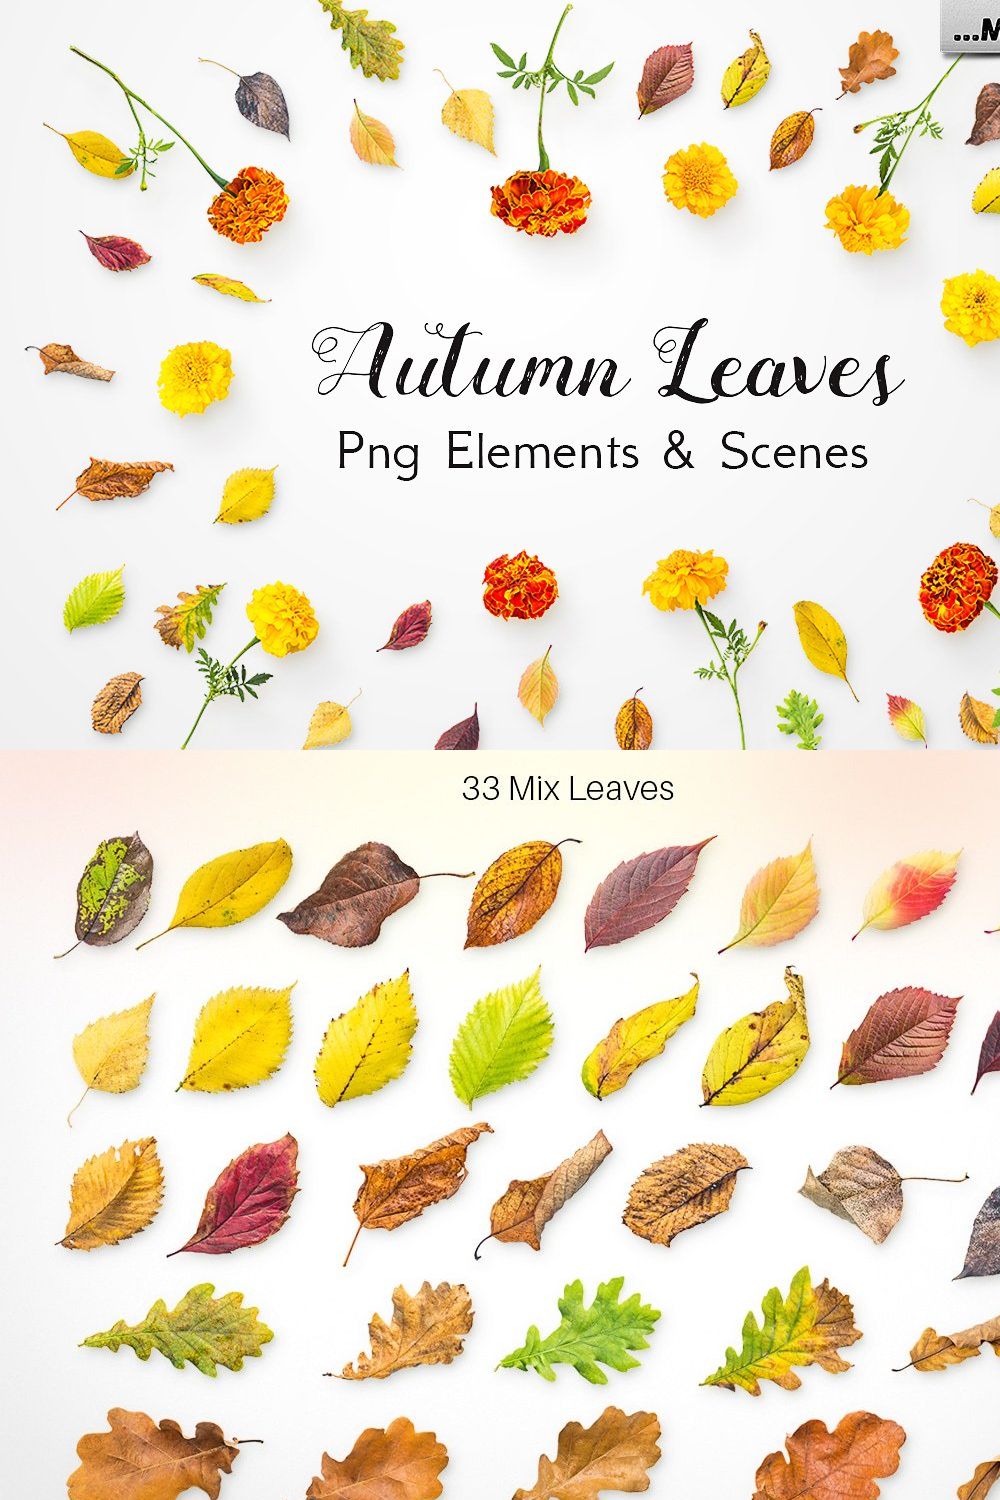 Autumn Leaves -Png Elements & Scenes pinterest preview image.